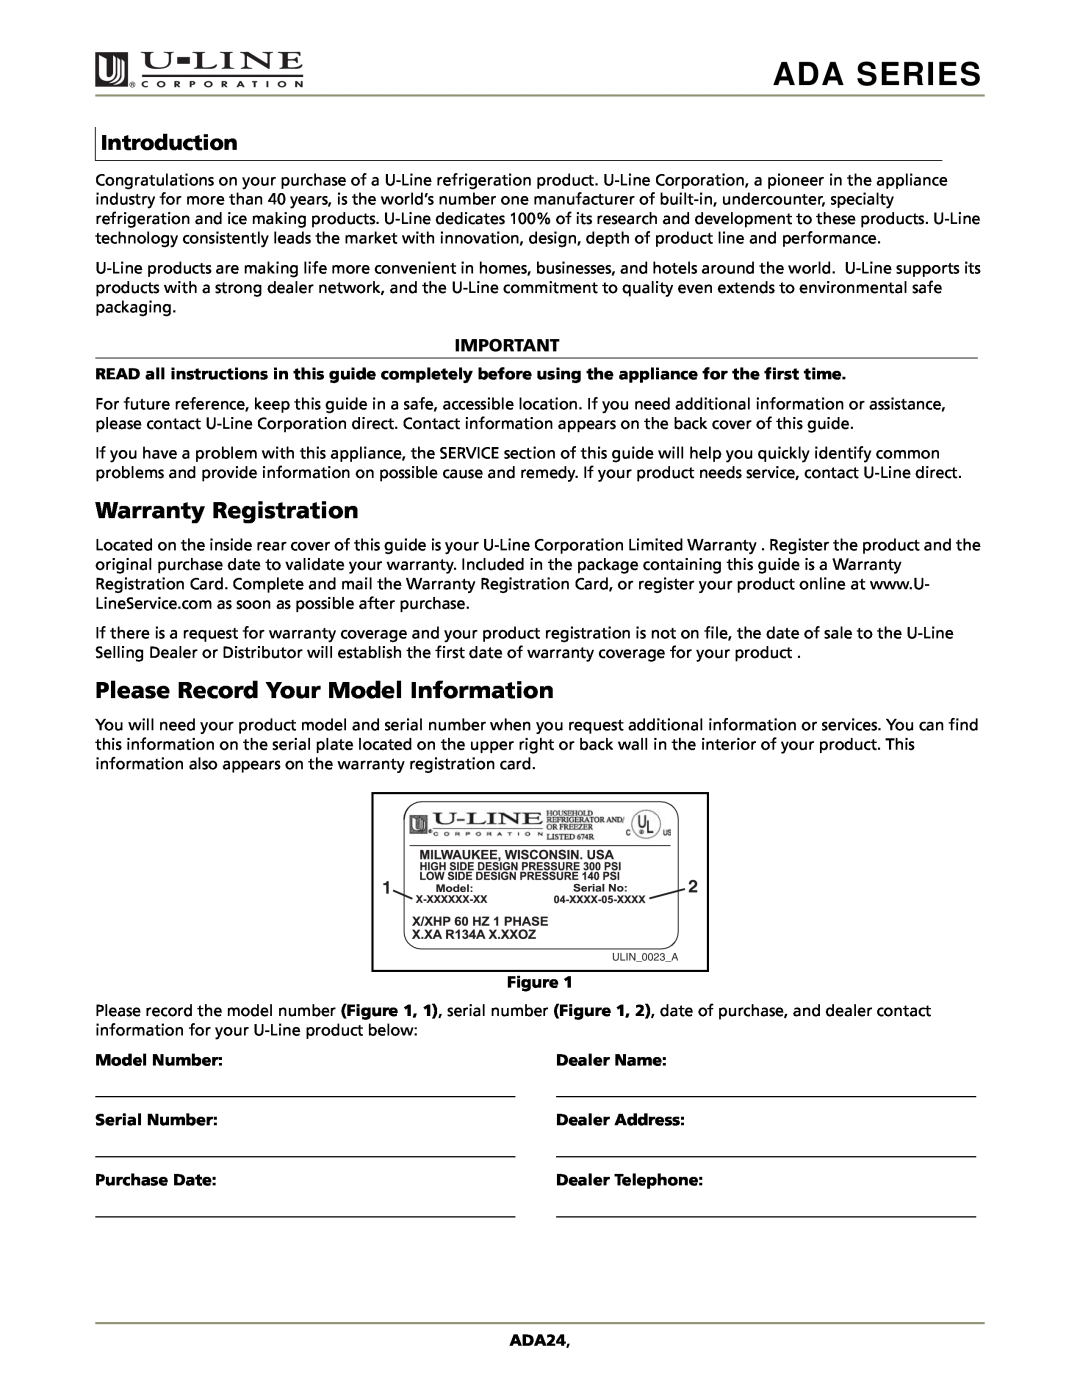 U-Line ADA24RGL manual Ada Series, Warranty Registration, Please Record Your Model Information, Introduction, Model Number 